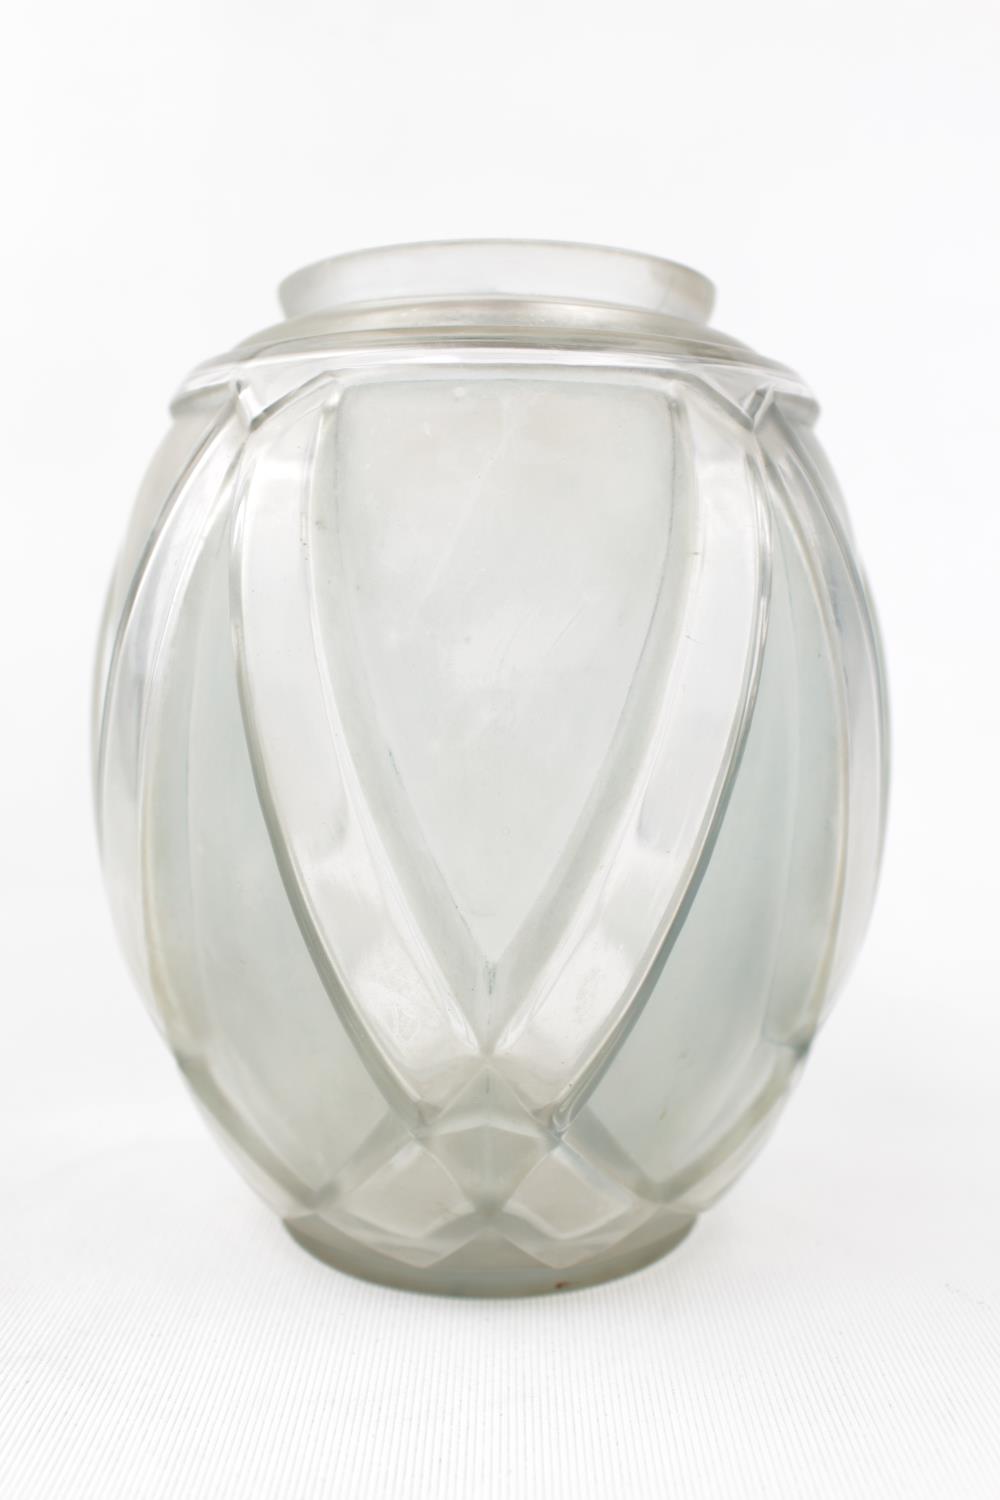 A Hunebelle of Fance Art Deco Ovoid vase 18cm in Height